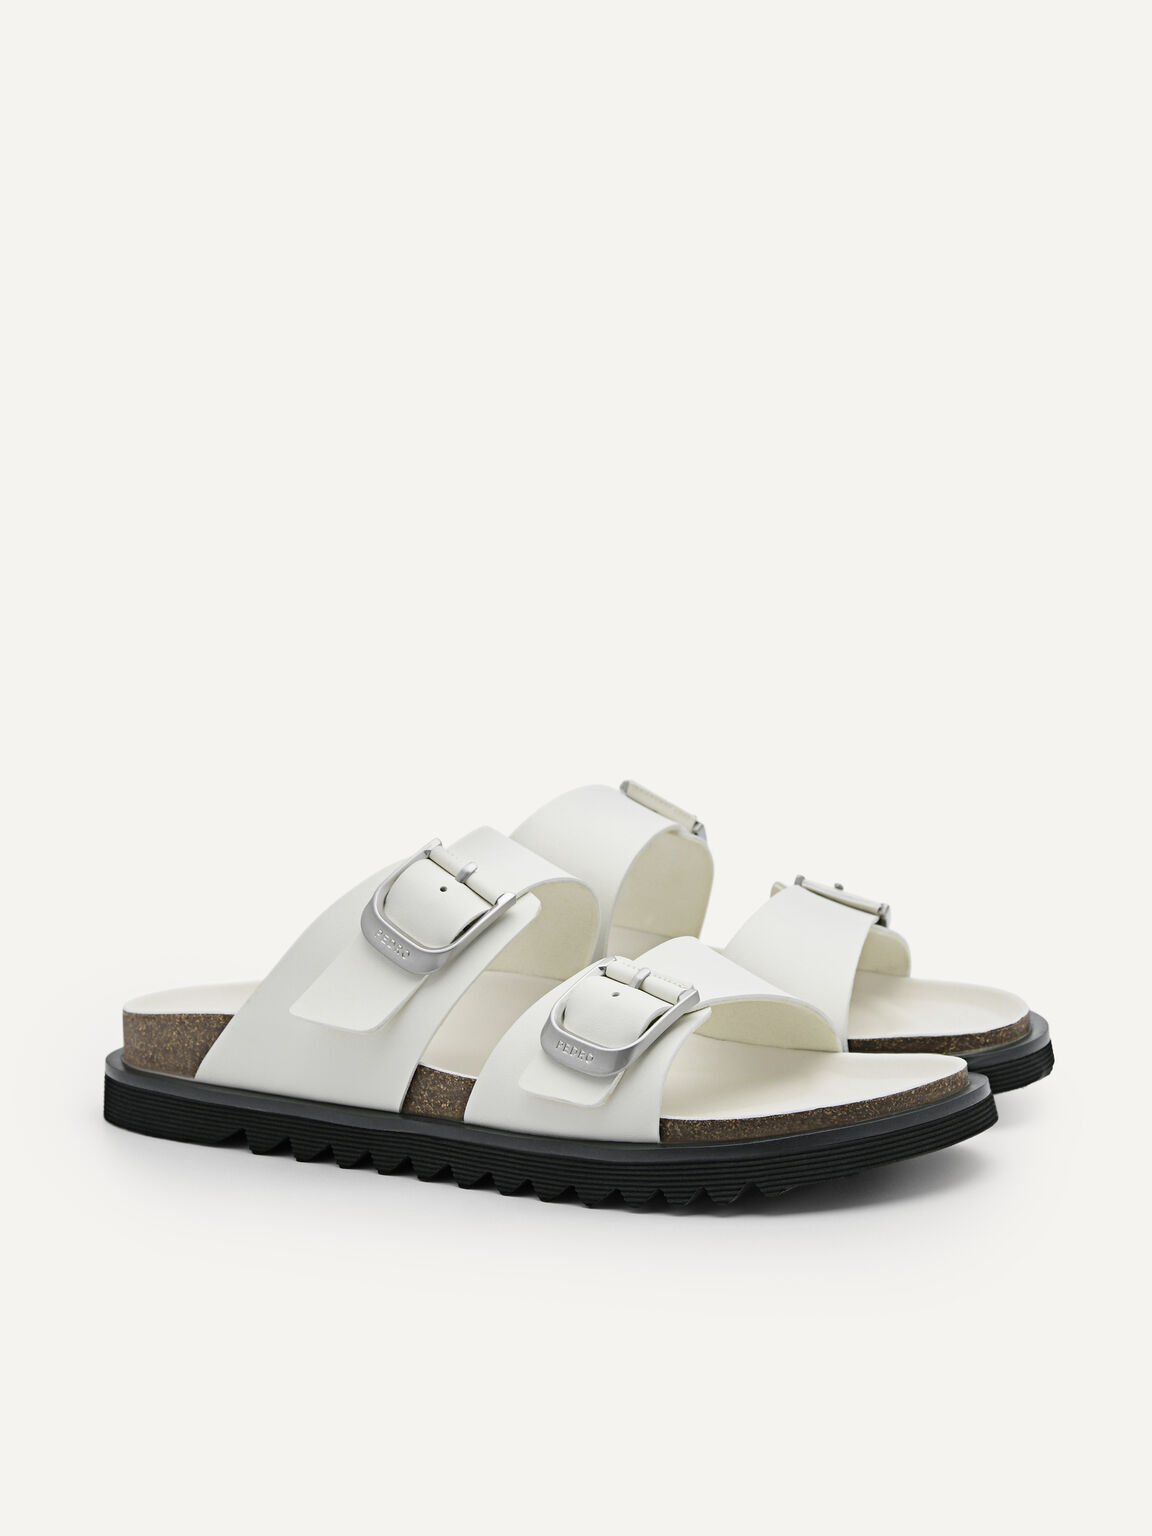 Men's Helix Slide Sandals, White, hi-res